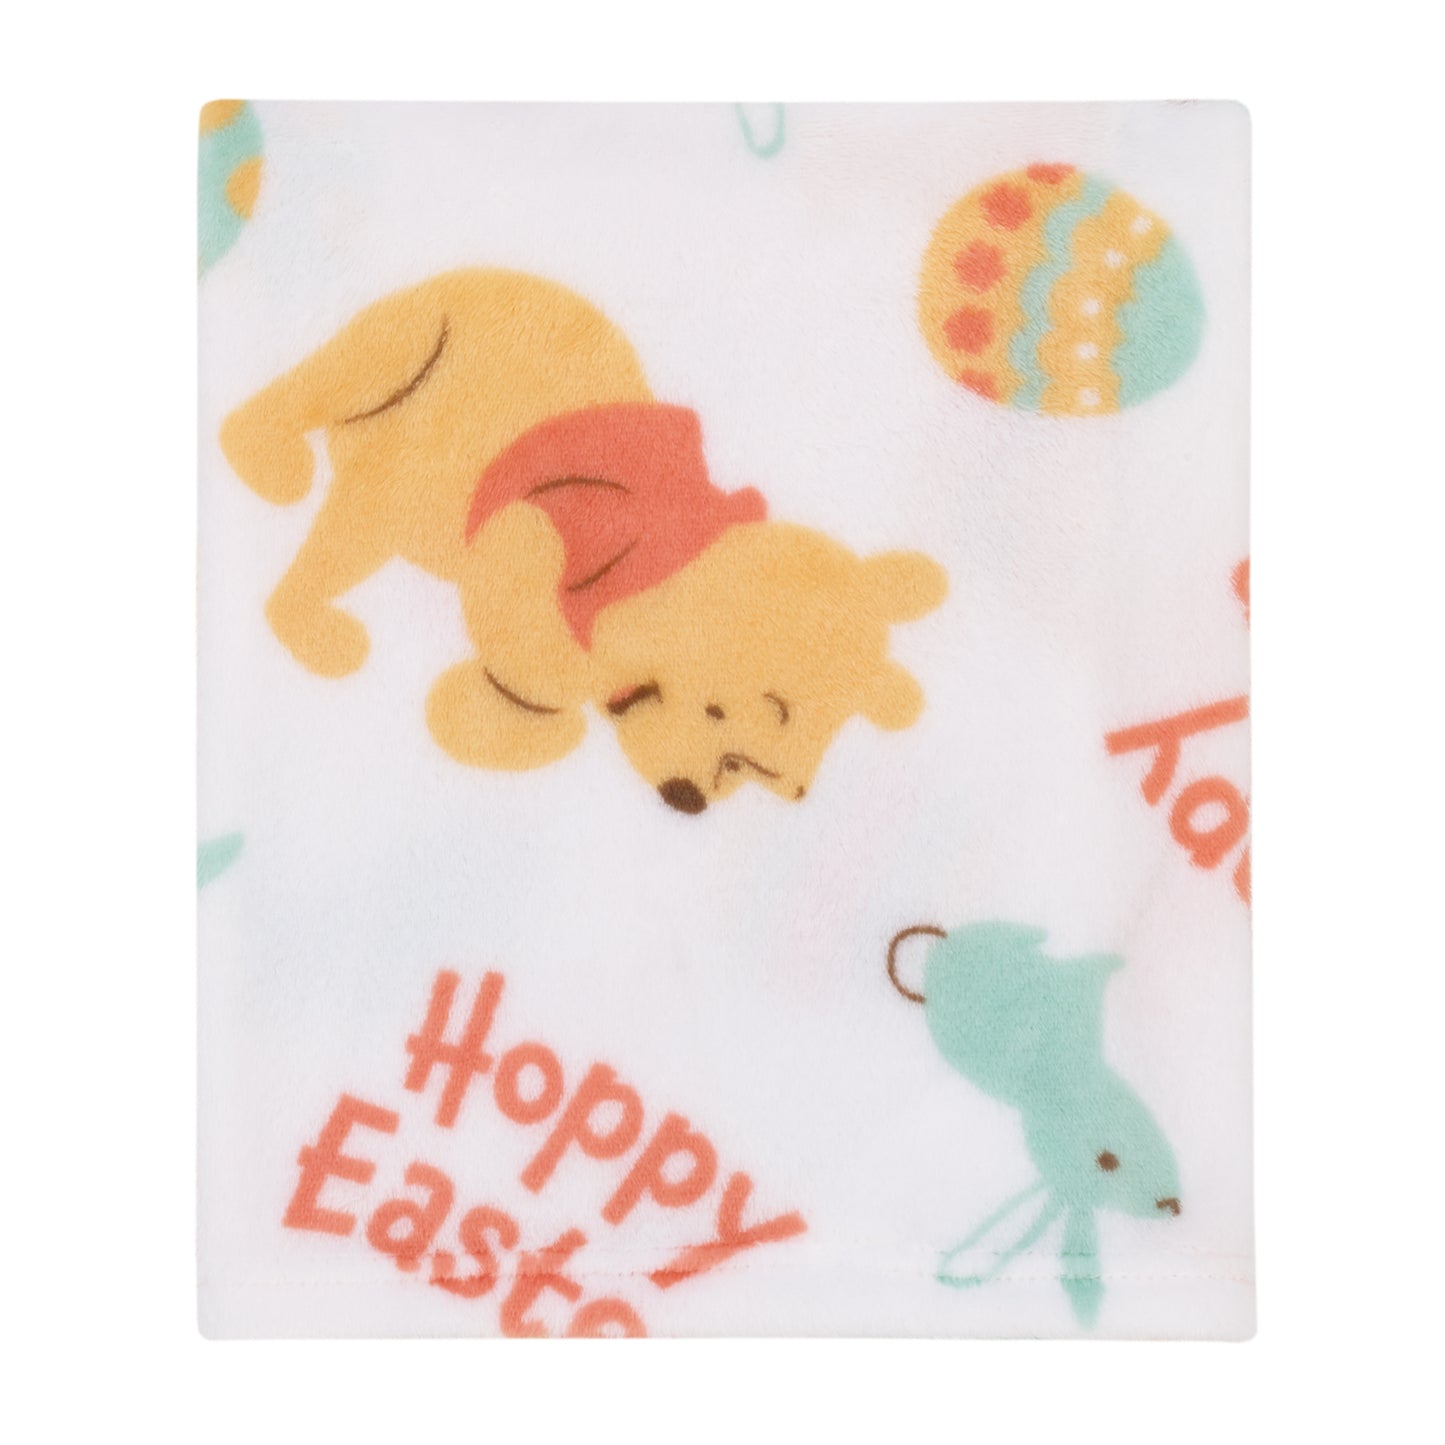 Disney Winnie the Pooh Aqua, Tan, Red, and White Hoppy Easter Super Soft Plush Baby Blanket